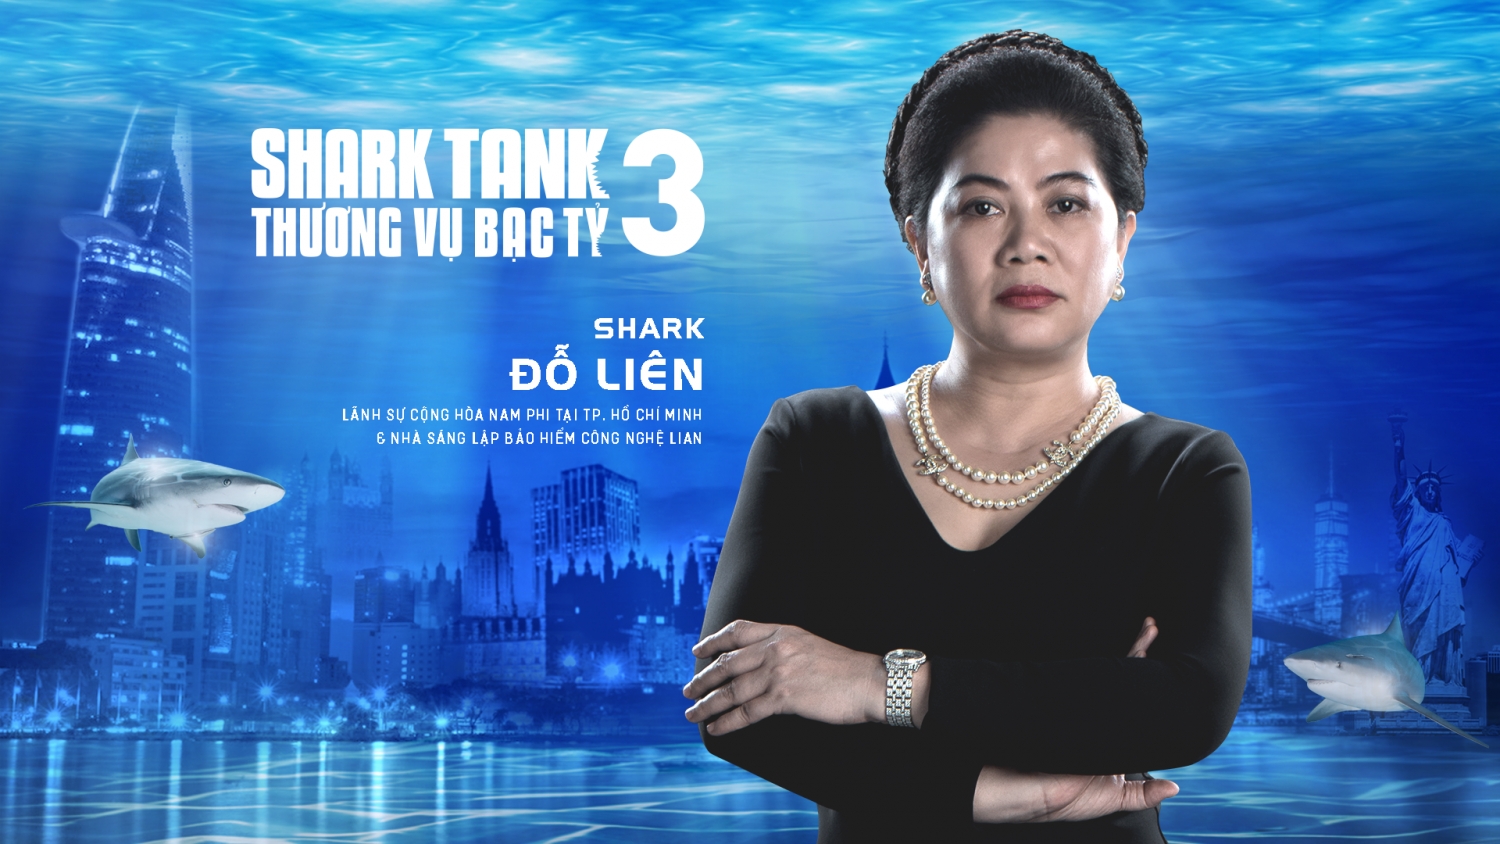 shark tank viet nam mua 3 shark tam va shark lien gop mat trong nhung cuoc di san